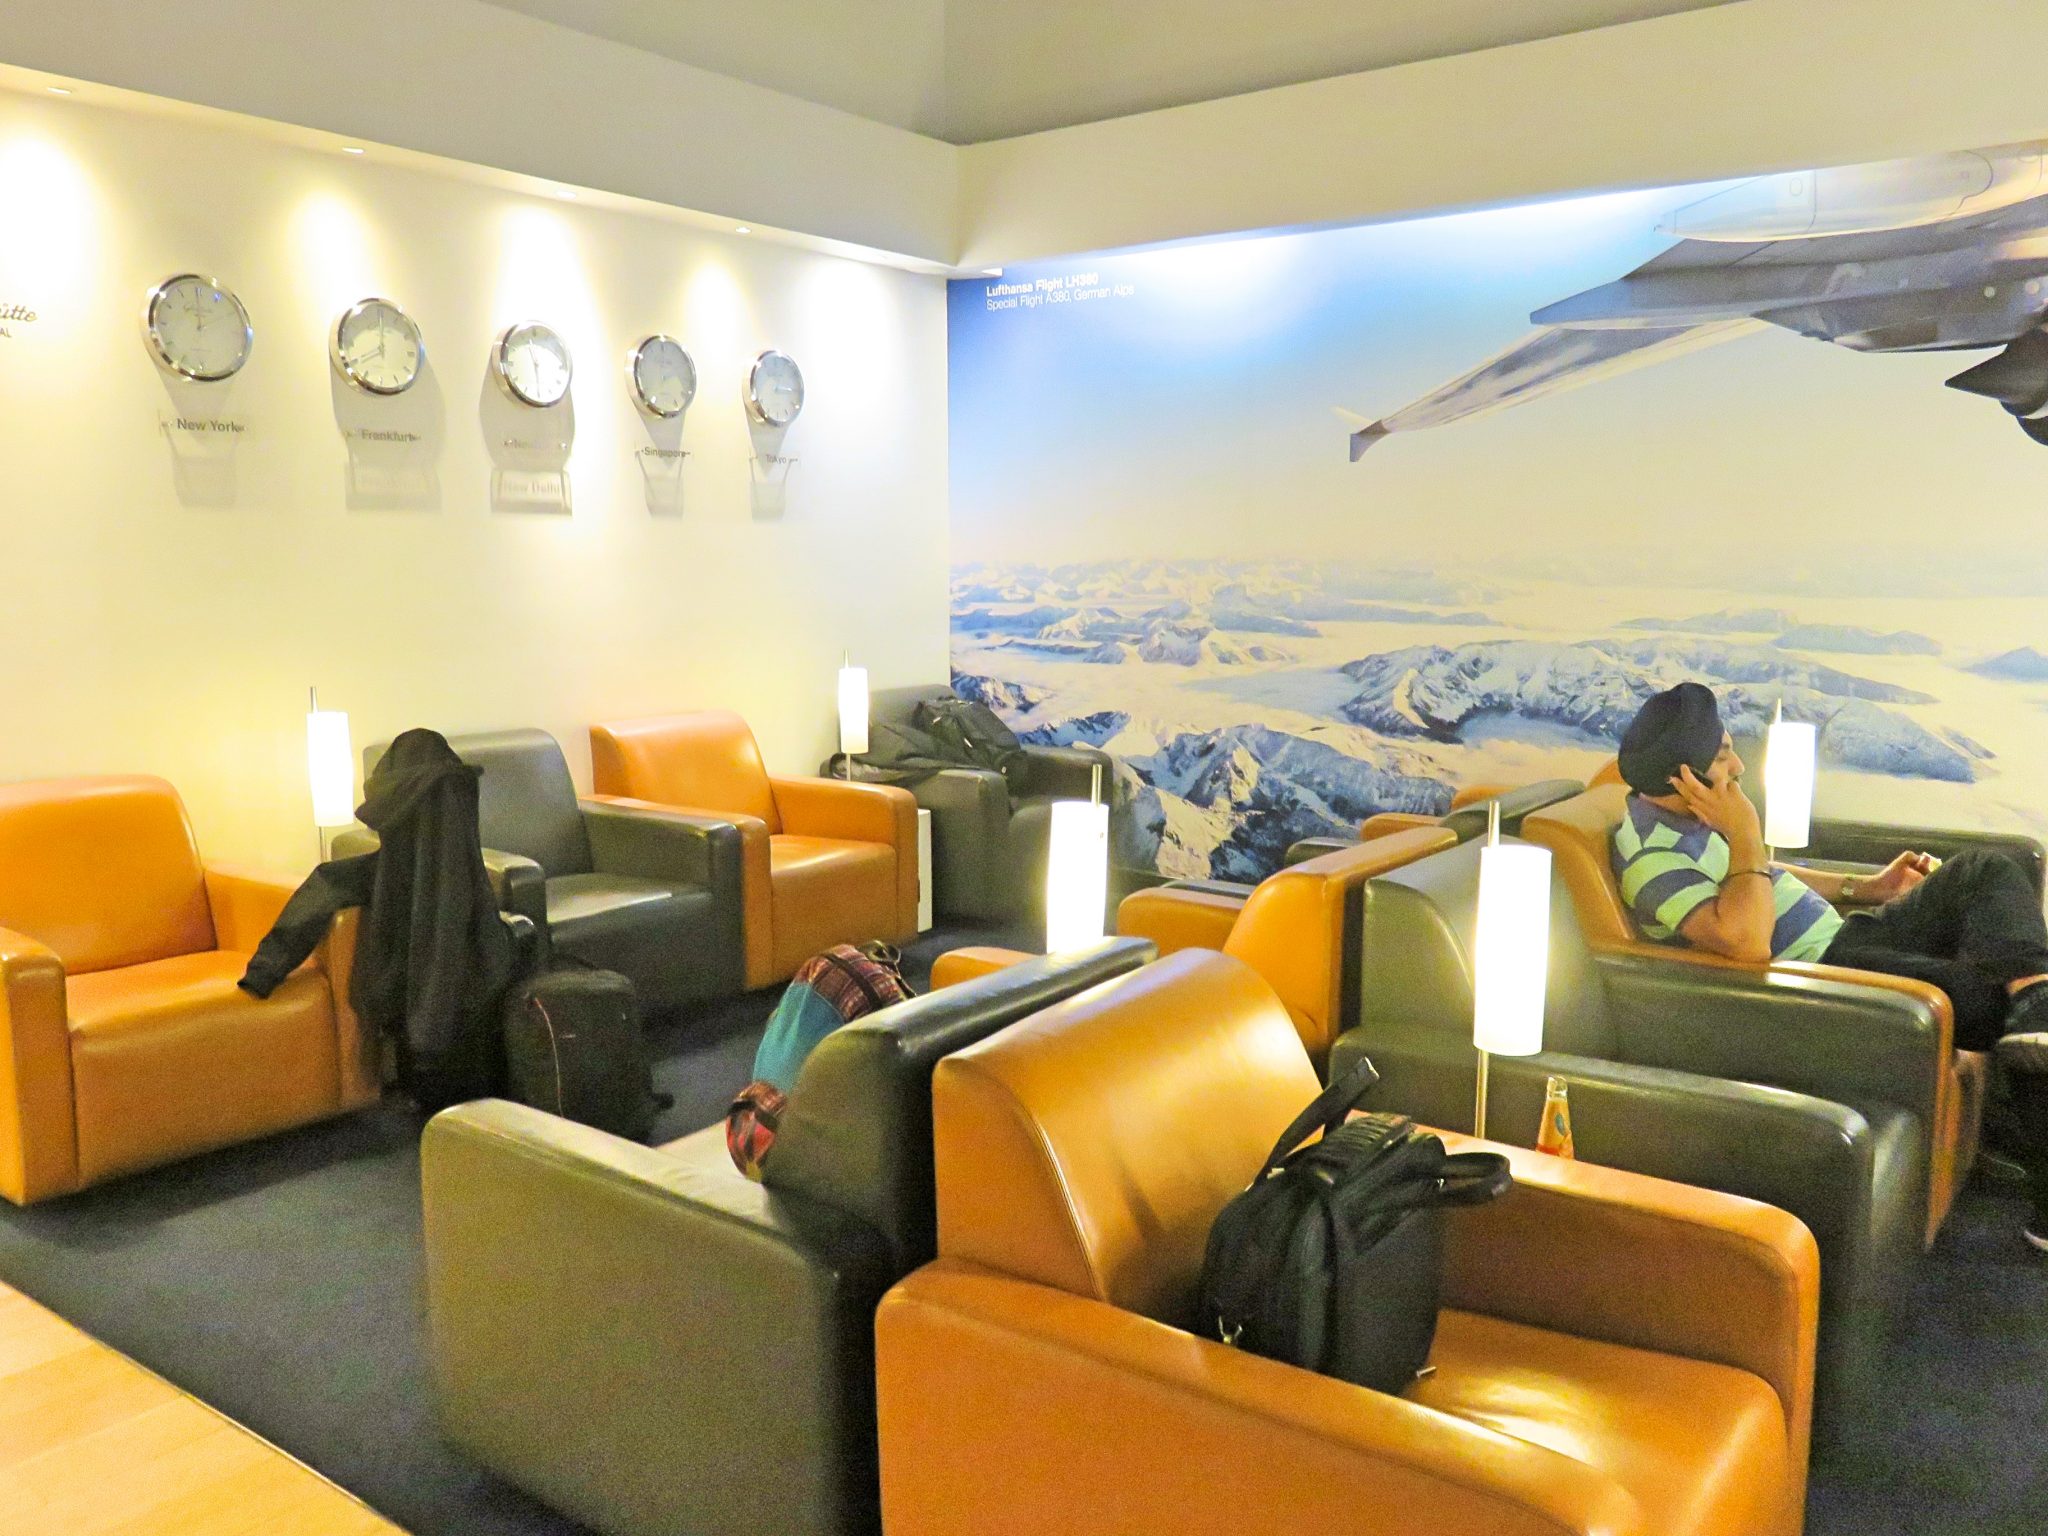 Lufthansa Business Lounge Delhi Airport